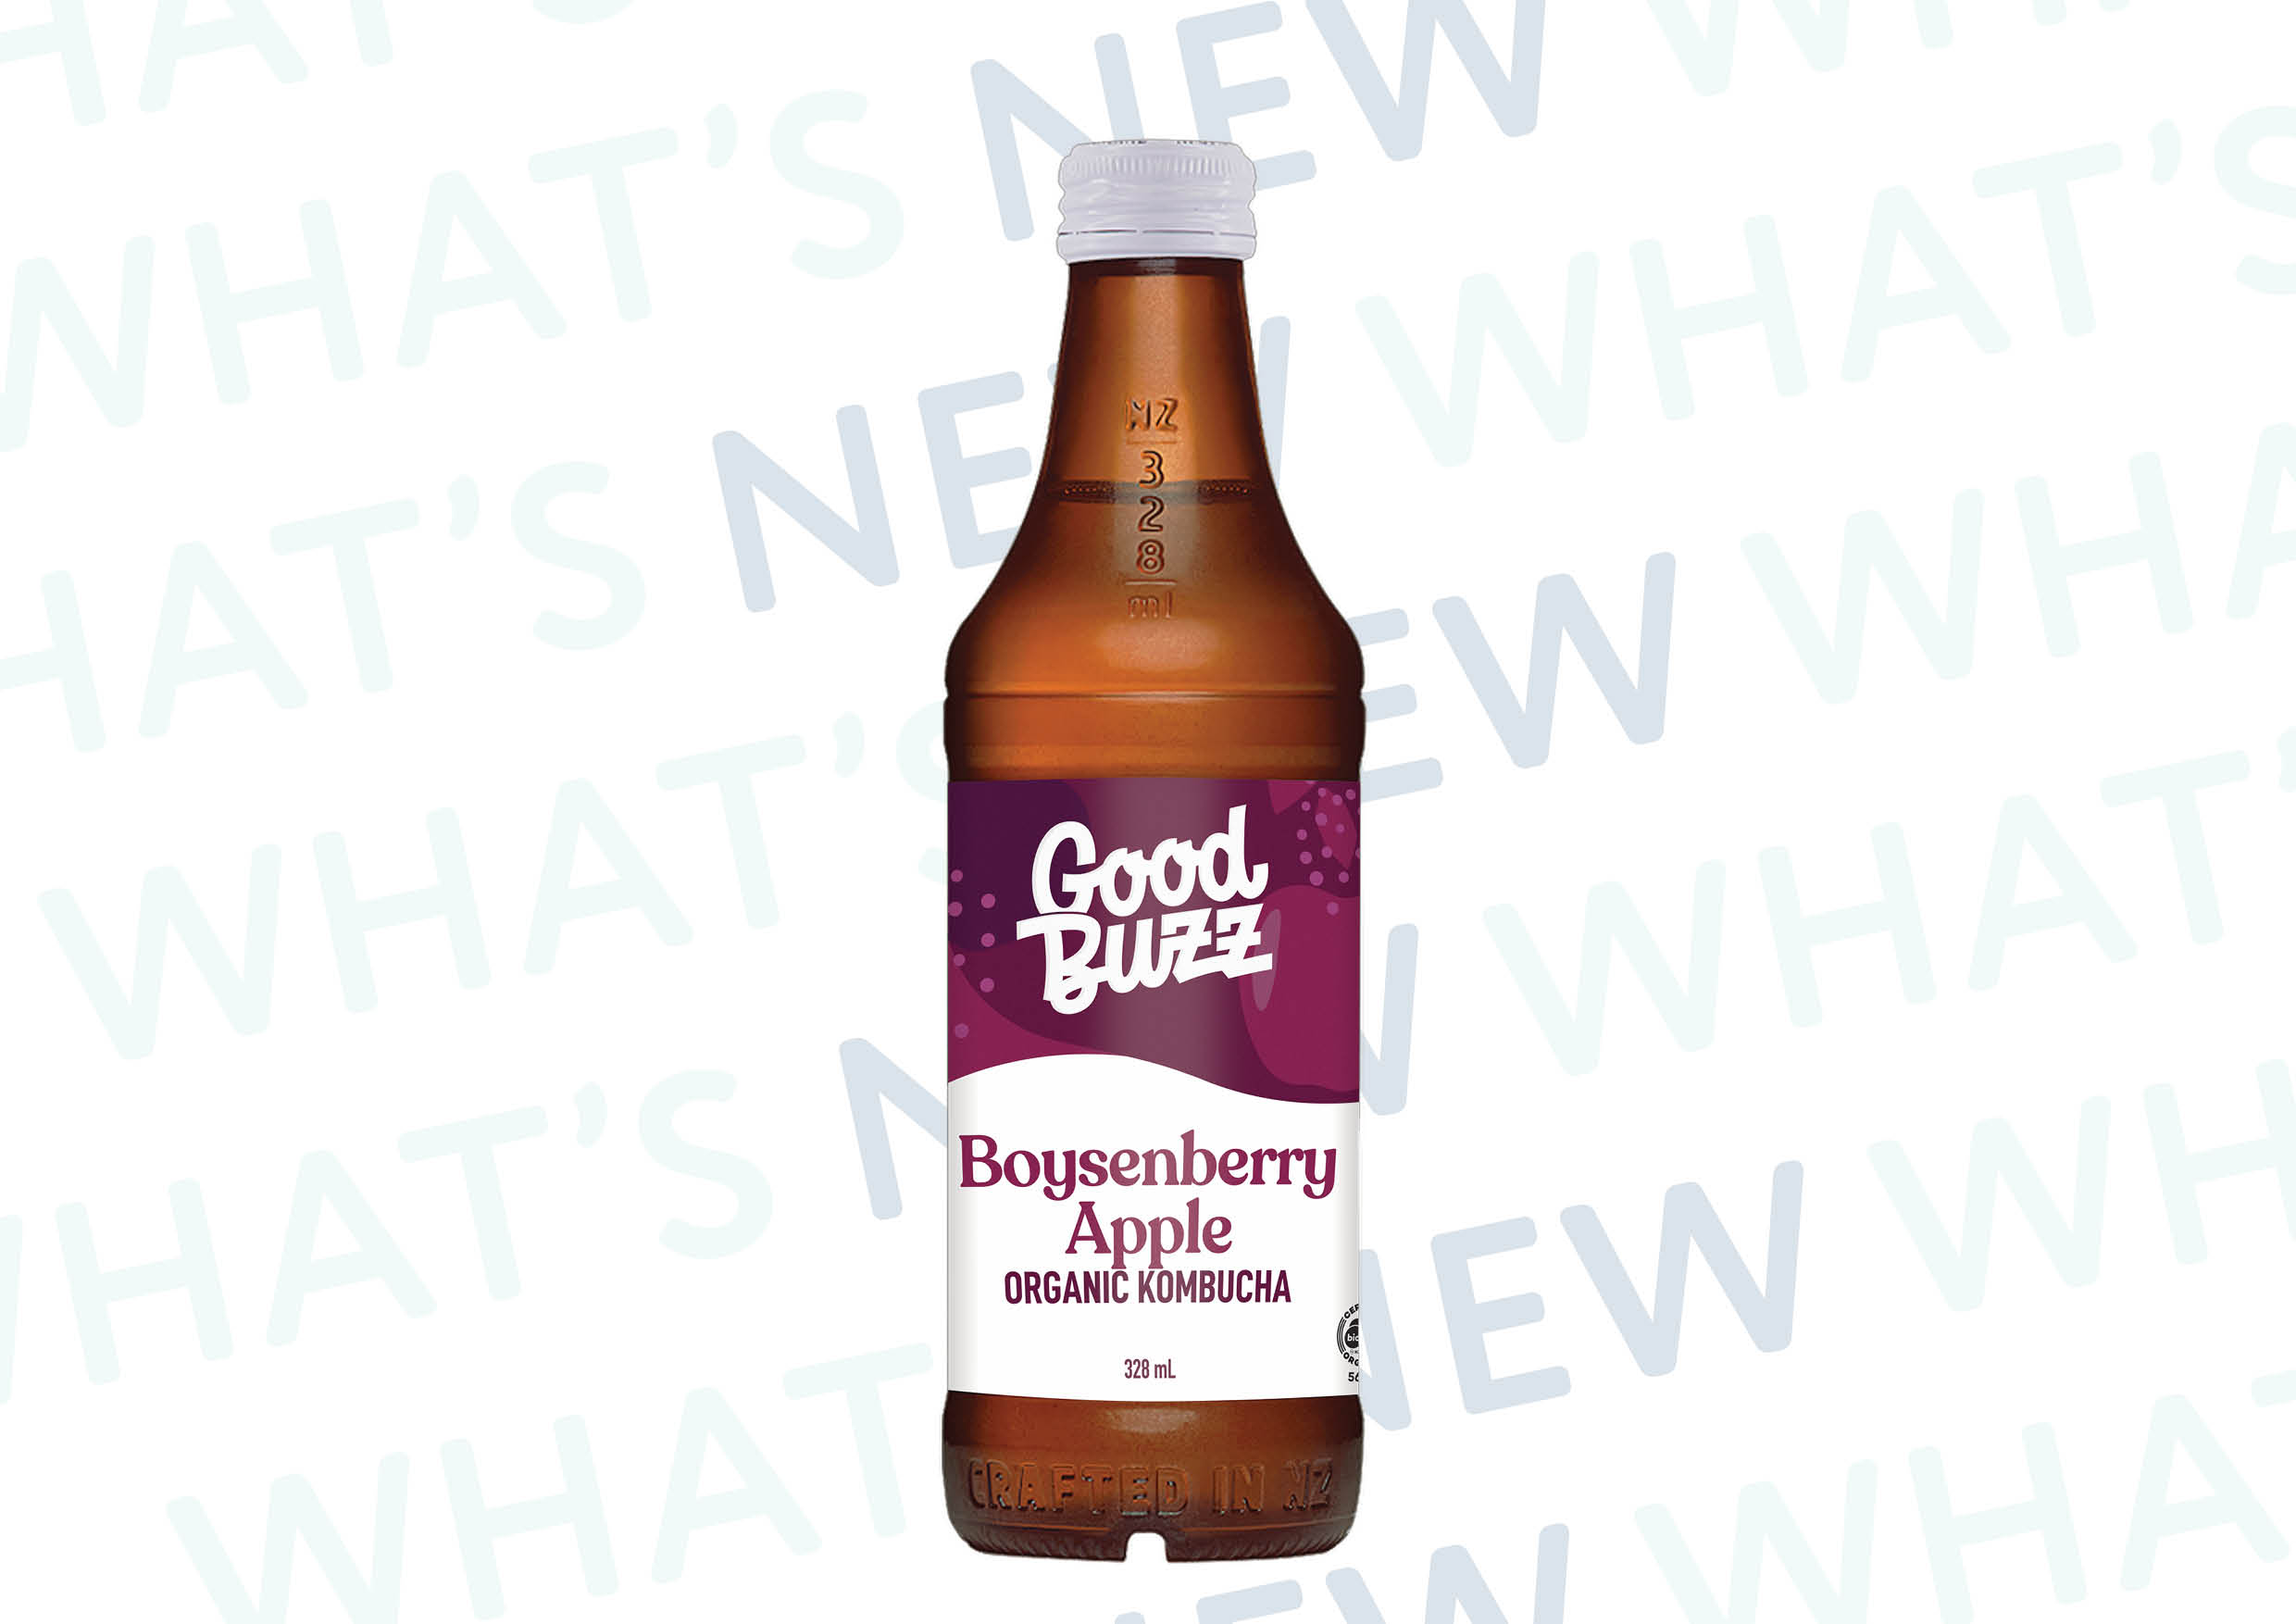 Good Buzz launches its new kombucha, boysenbery and apple.